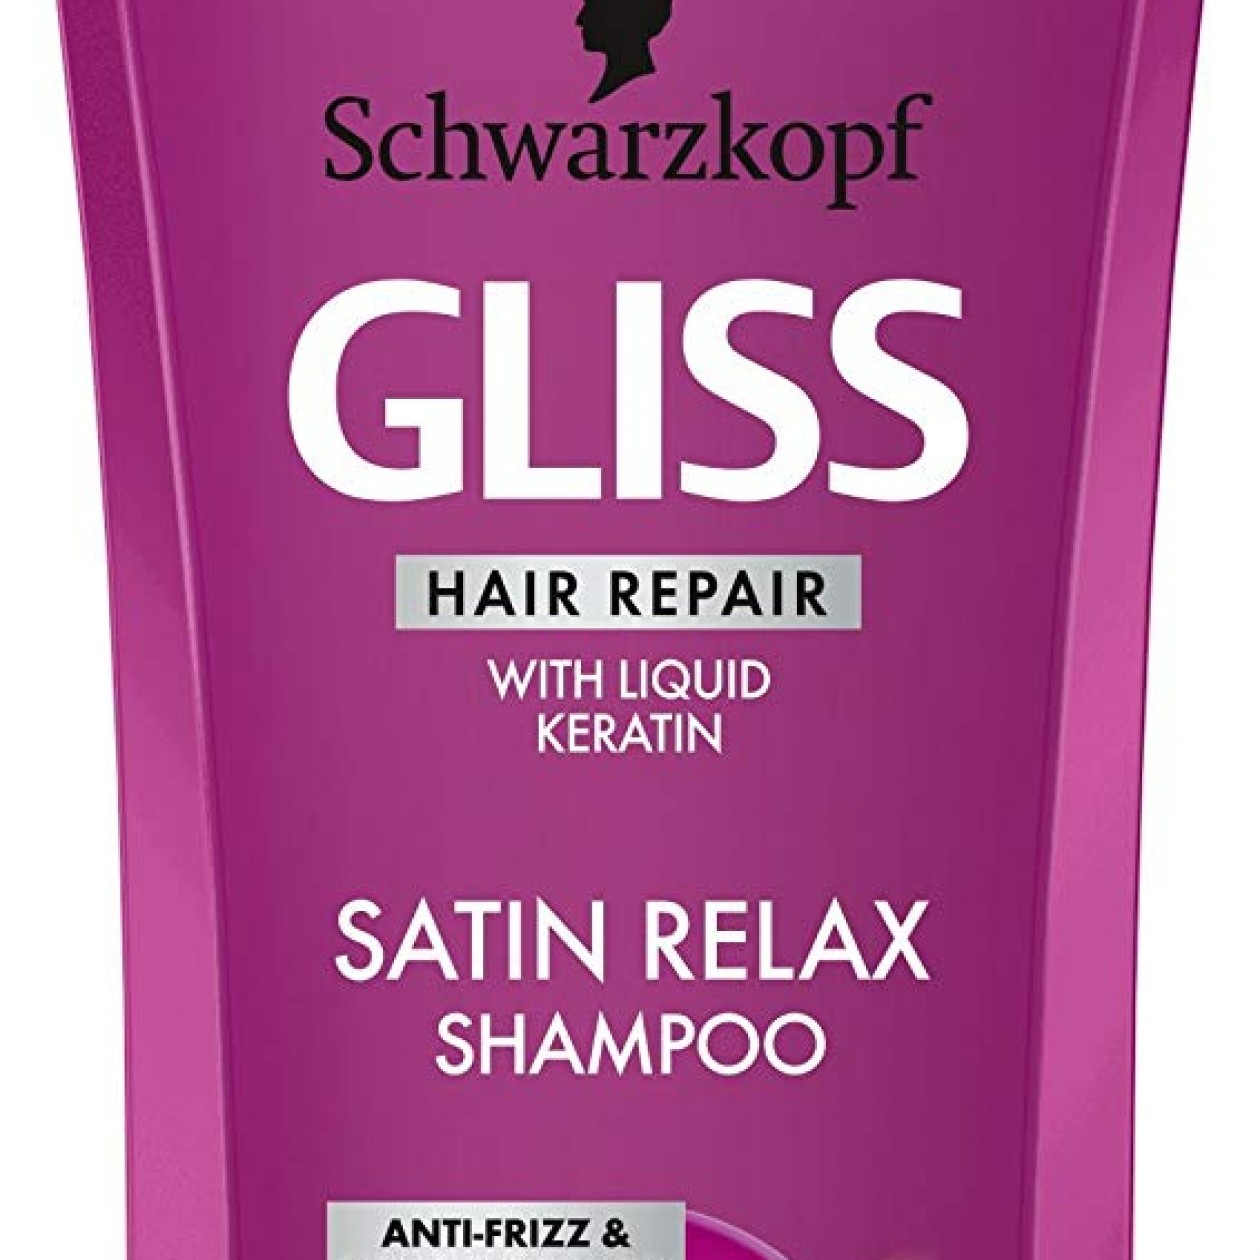 Schwarzkopf Gliss Shampoo Satin Relax 200mL